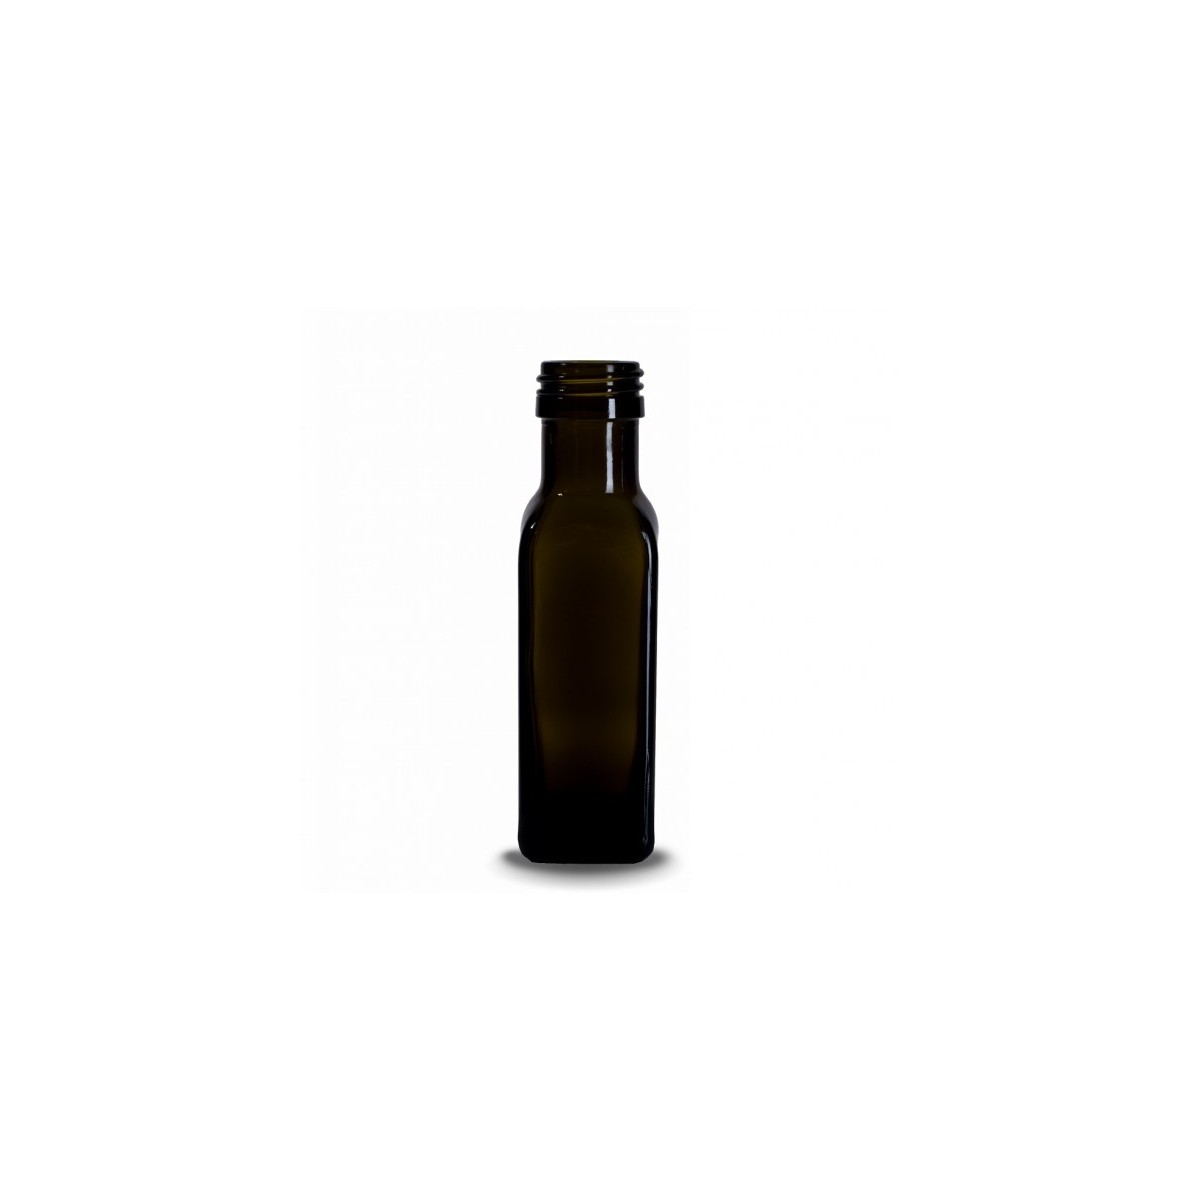 Stiklinis butelis aliejui Frantoio, 0,1 l. 4500 vnt paletė